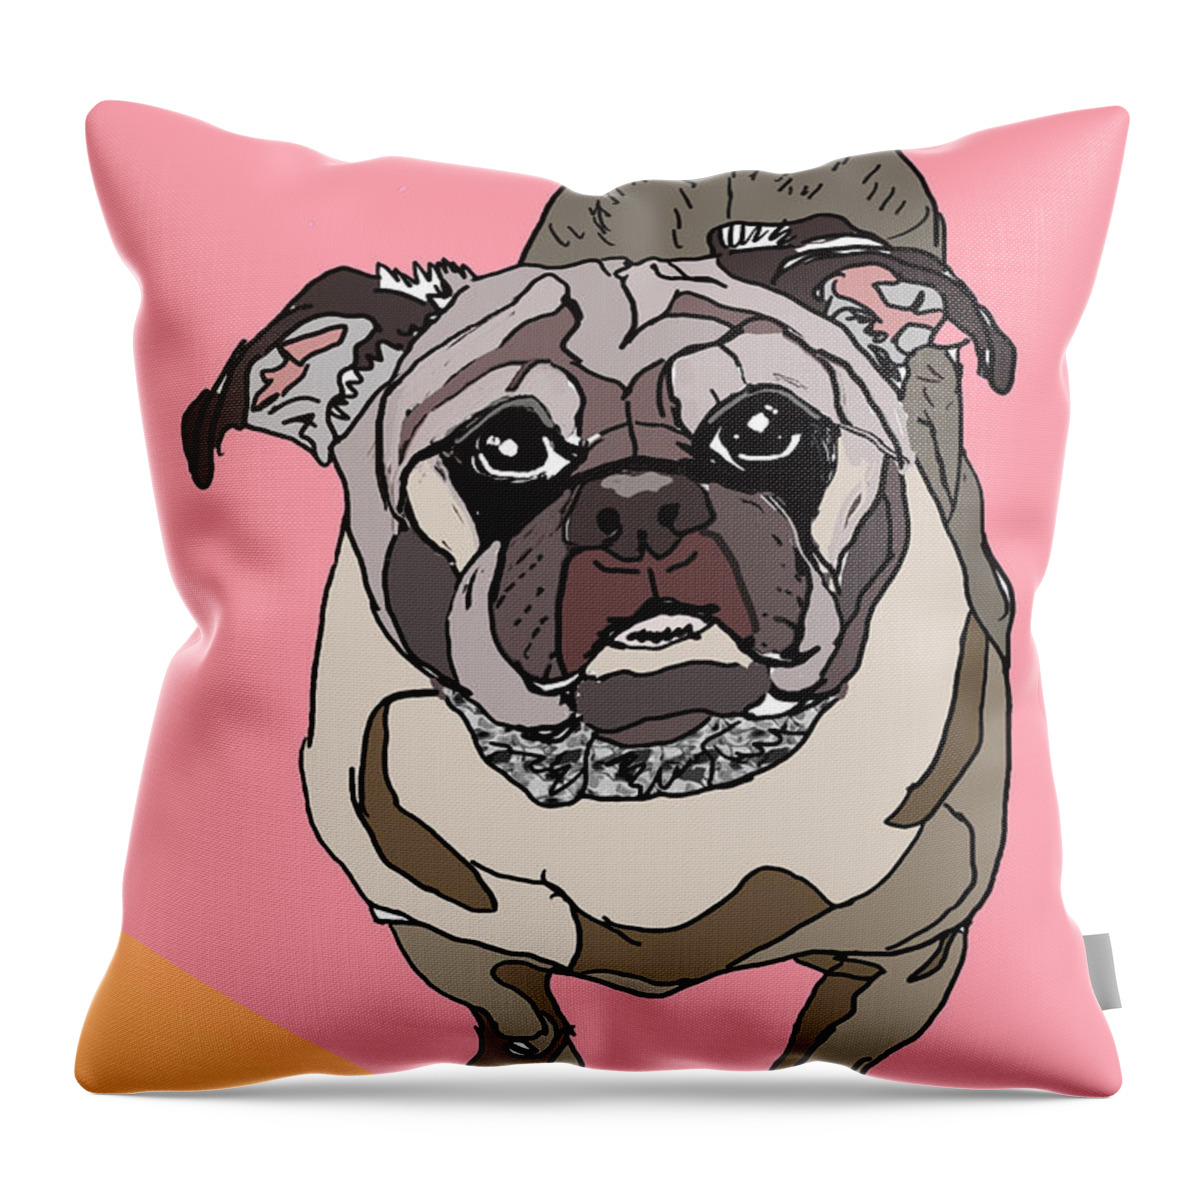 Pug Throw Pillow featuring the digital art Pug in Digi by Ania M Milo